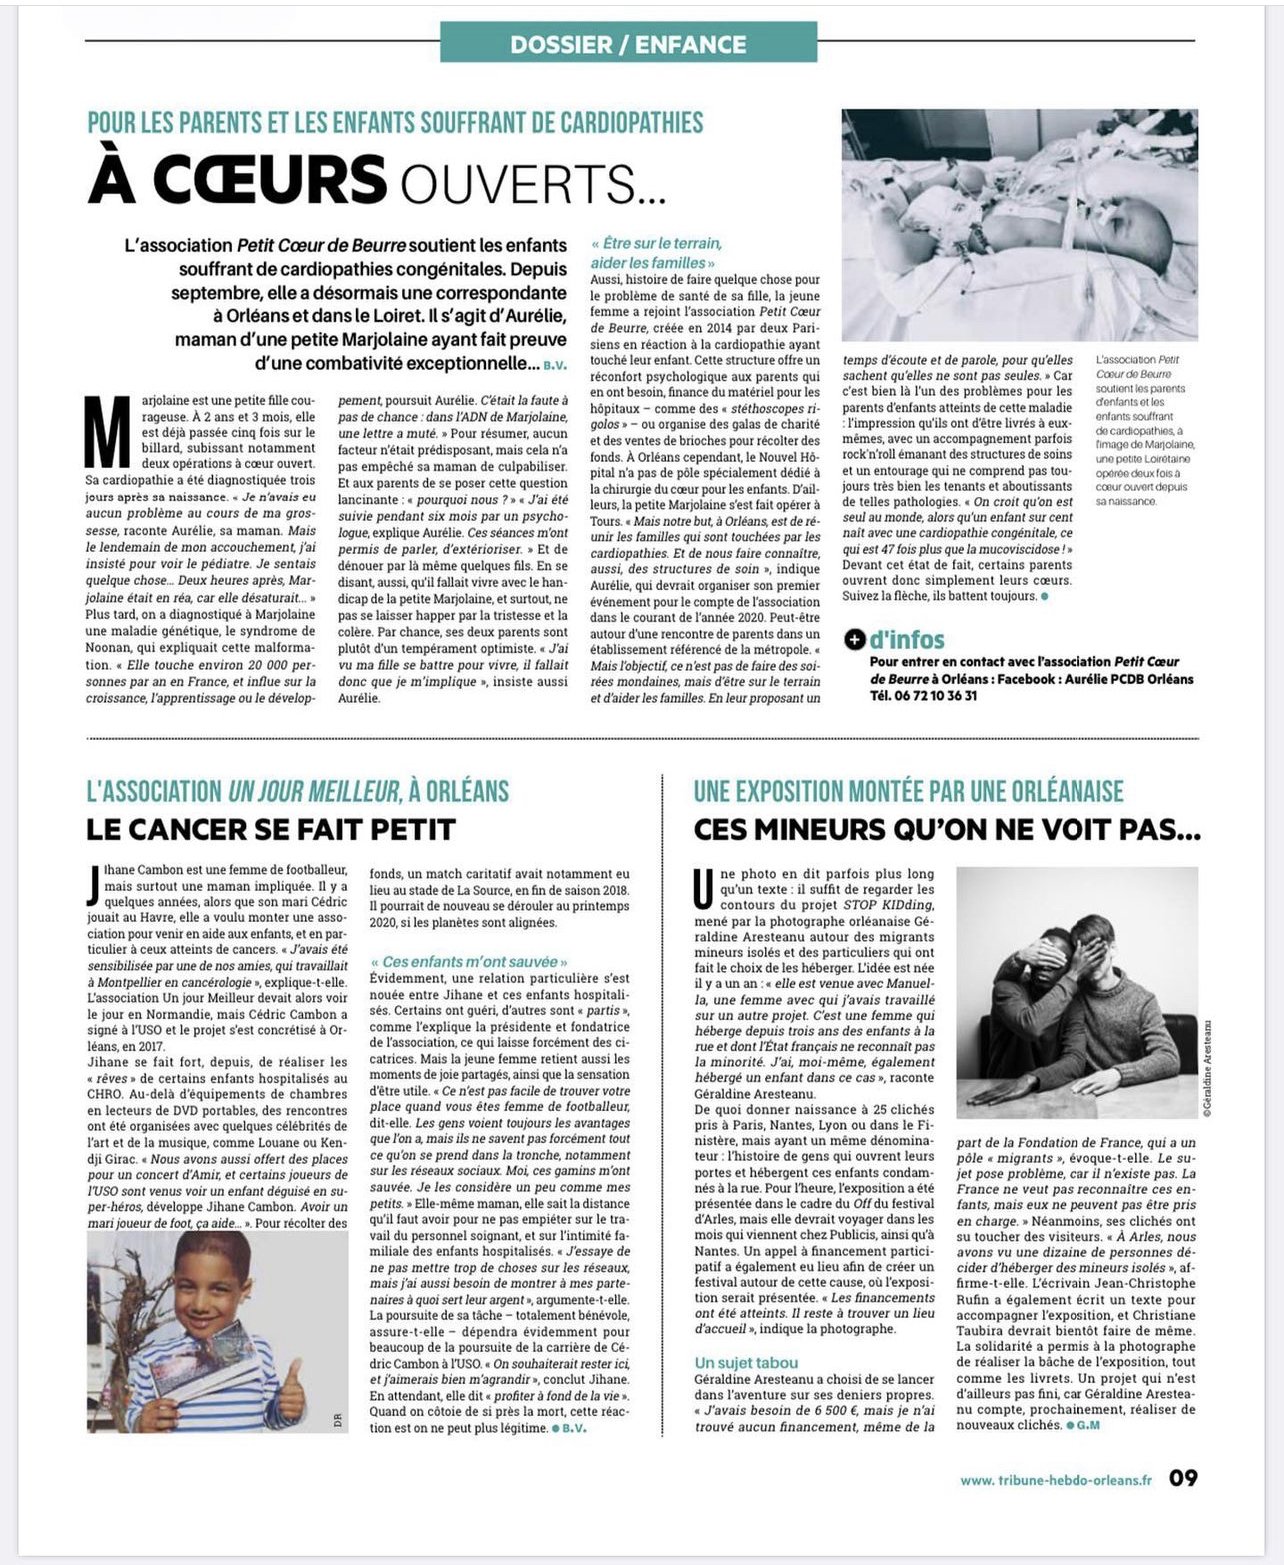 Article Tribune Hebdo Orléans 2019